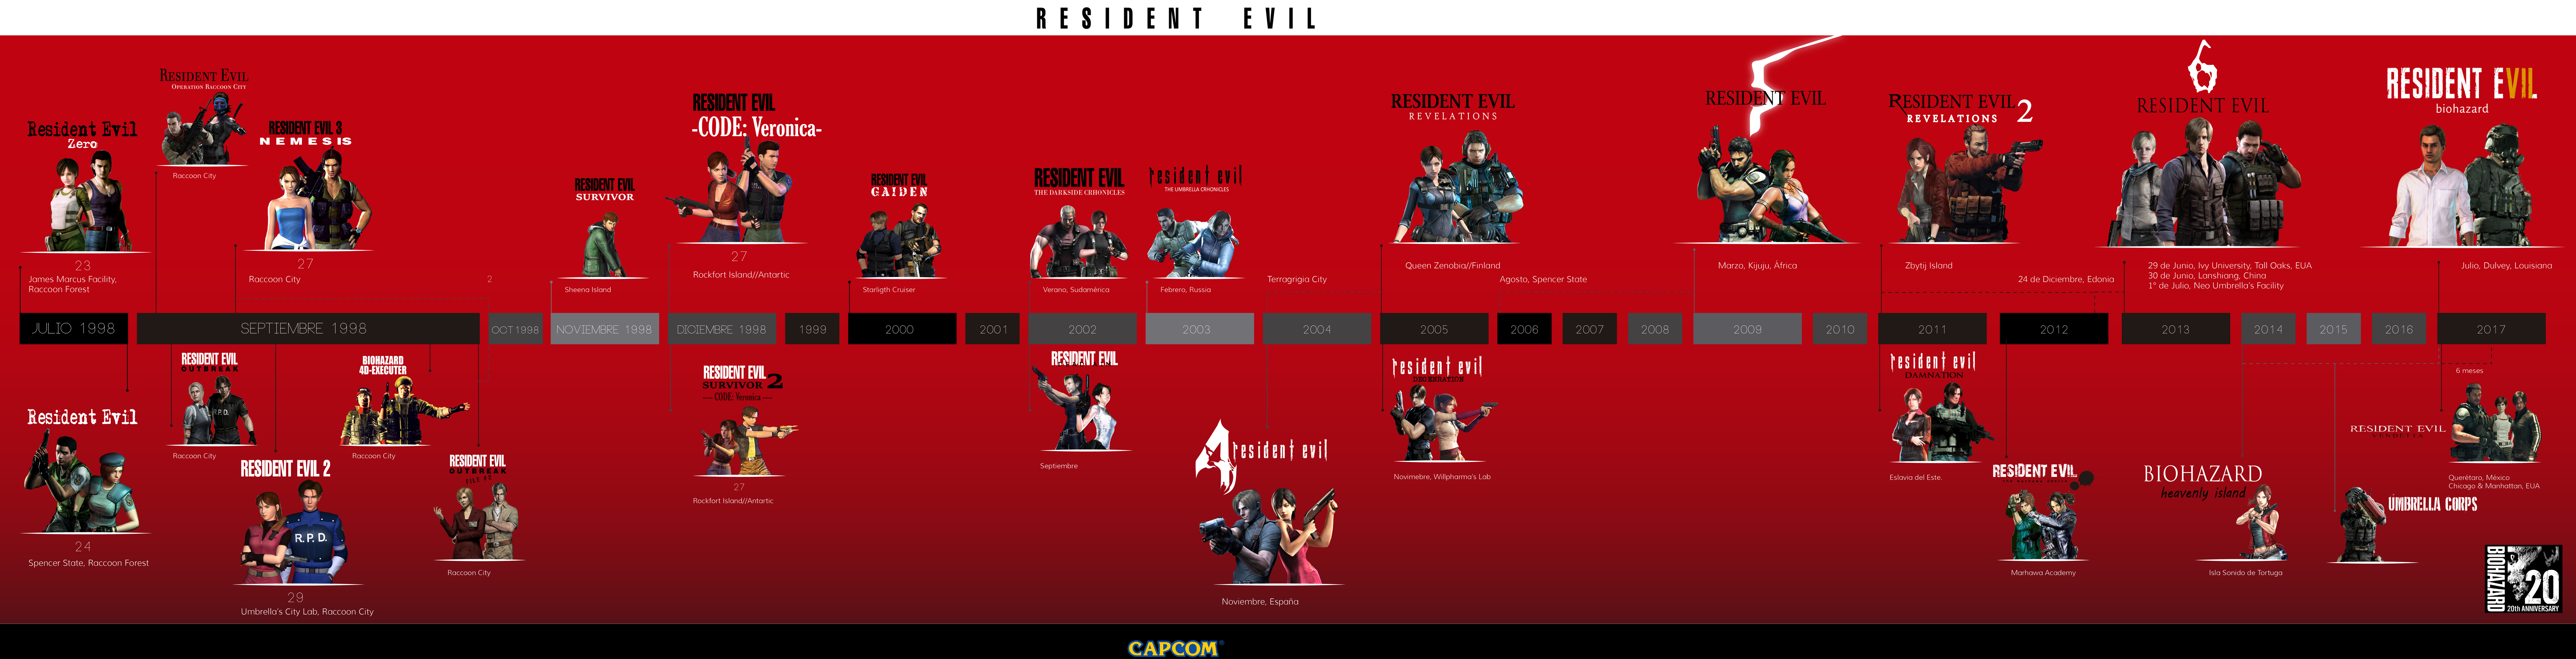 The Complete Resident Evil Timeline (In Chronological Order)